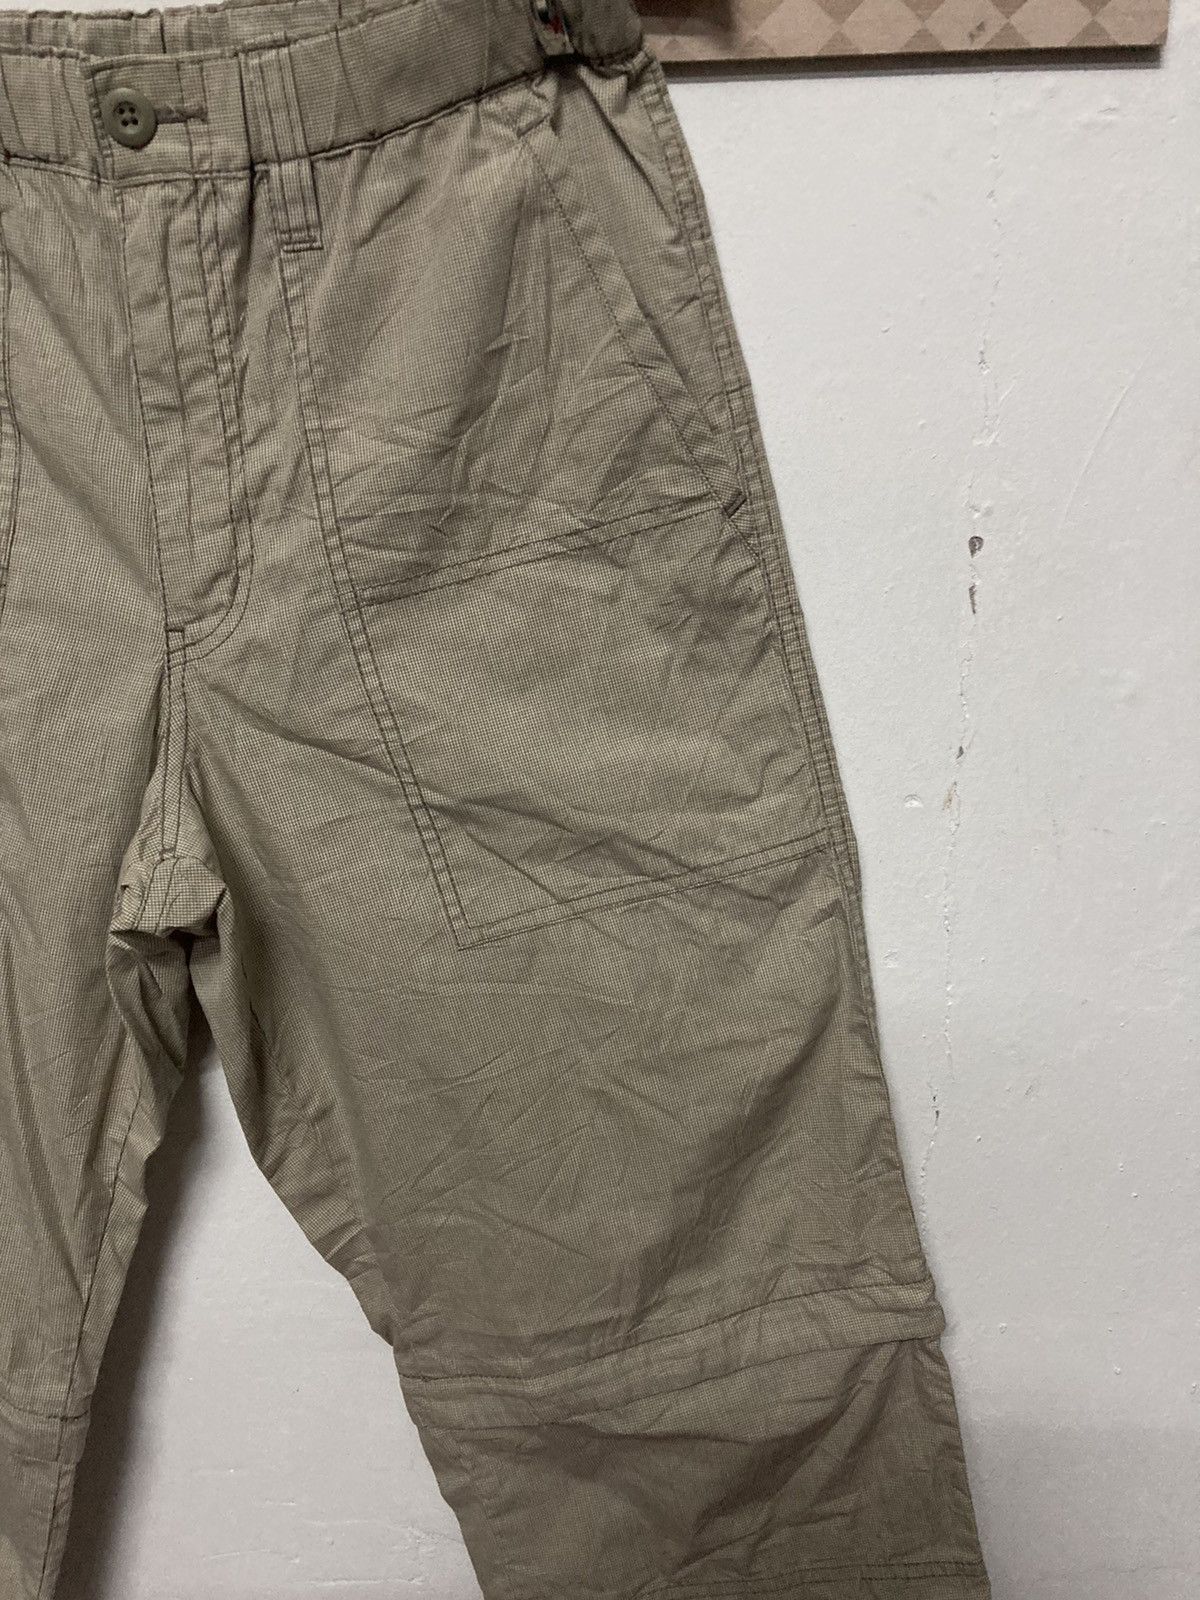 Vintage Uniqlo 3 Quarter Drawstring Pant Size Up to 32 - 6